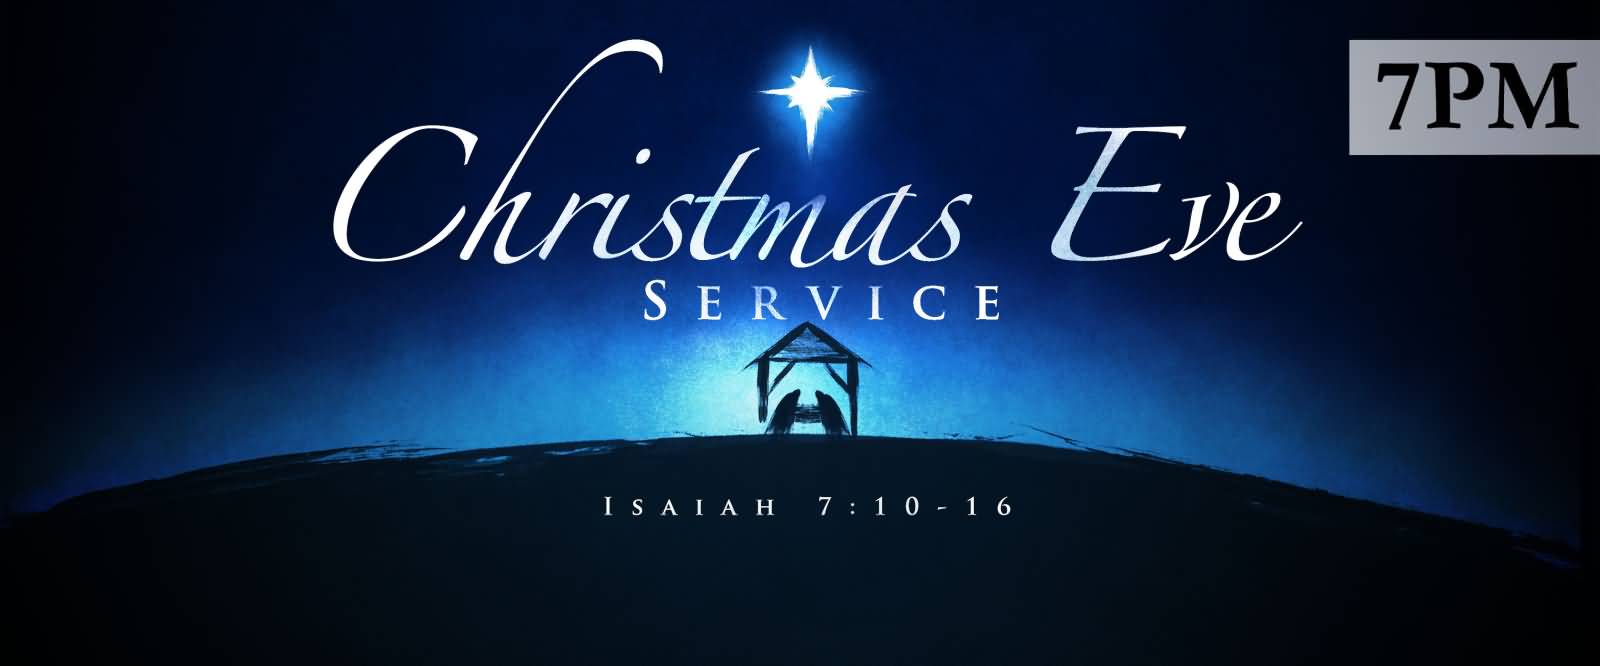 Christmas Eve Service Facebook Cover Photo